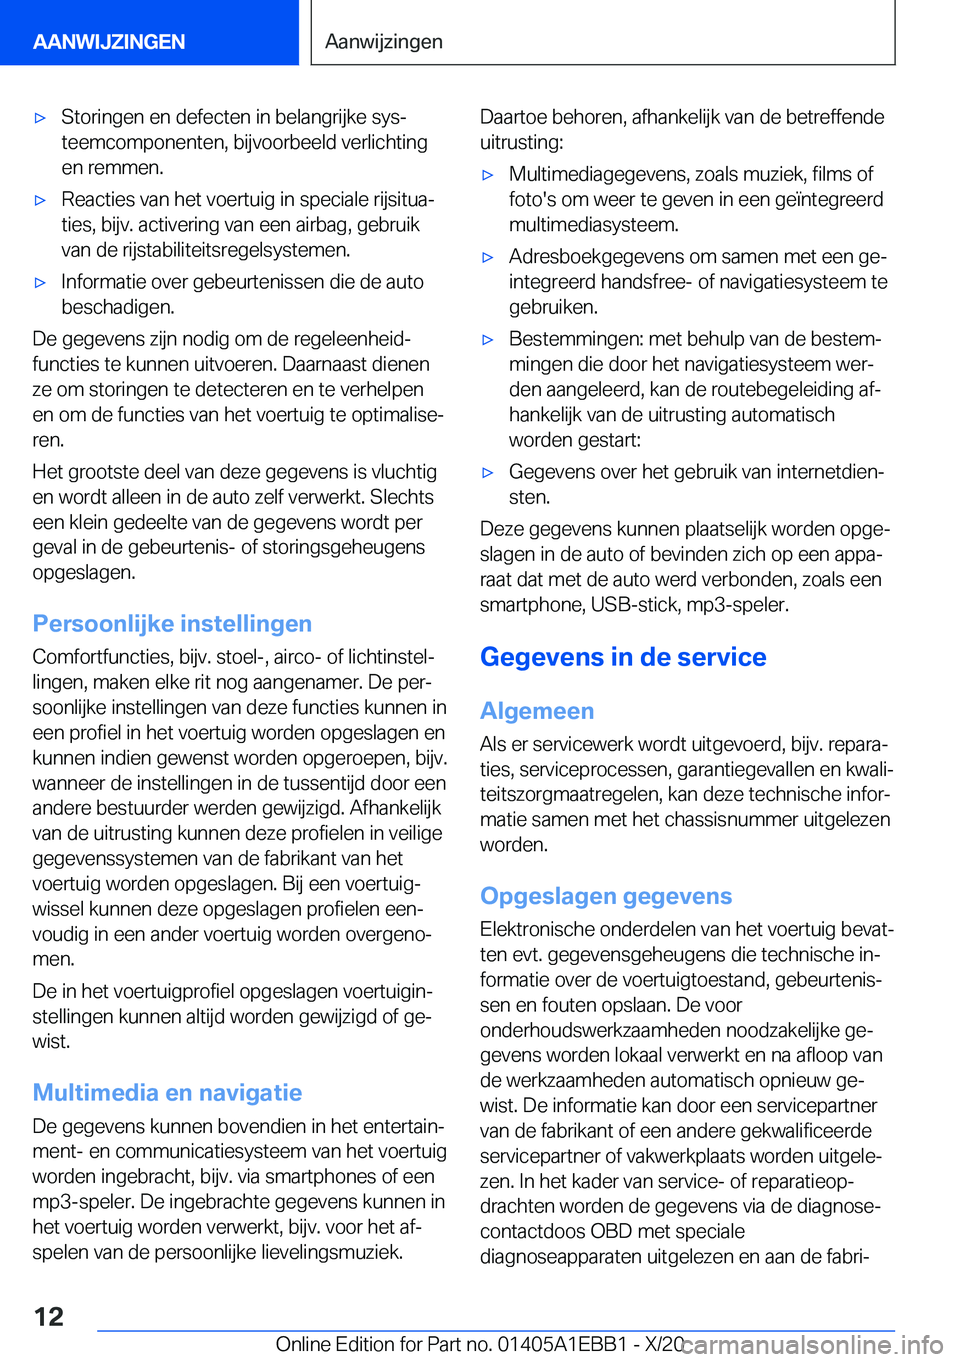 BMW 3 SERIES 2021  Instructieboekjes (in Dutch) 'x�S�t�o�r�i�n�g�e�n��e�n��d�e�f�e�c�t�e�n��i�n��b�e�l�a�n�g�r�i�j�k�e��s�y�sj
�t�e�e�m�c�o�m�p�o�n�e�n�t�e�n�,��b�i�j�v�o�o�r�b�e�e�l�d��v�e�r�l�i�c�h�t�i�n�g
�e�n��r�e�m�m�e�n�.'x�R